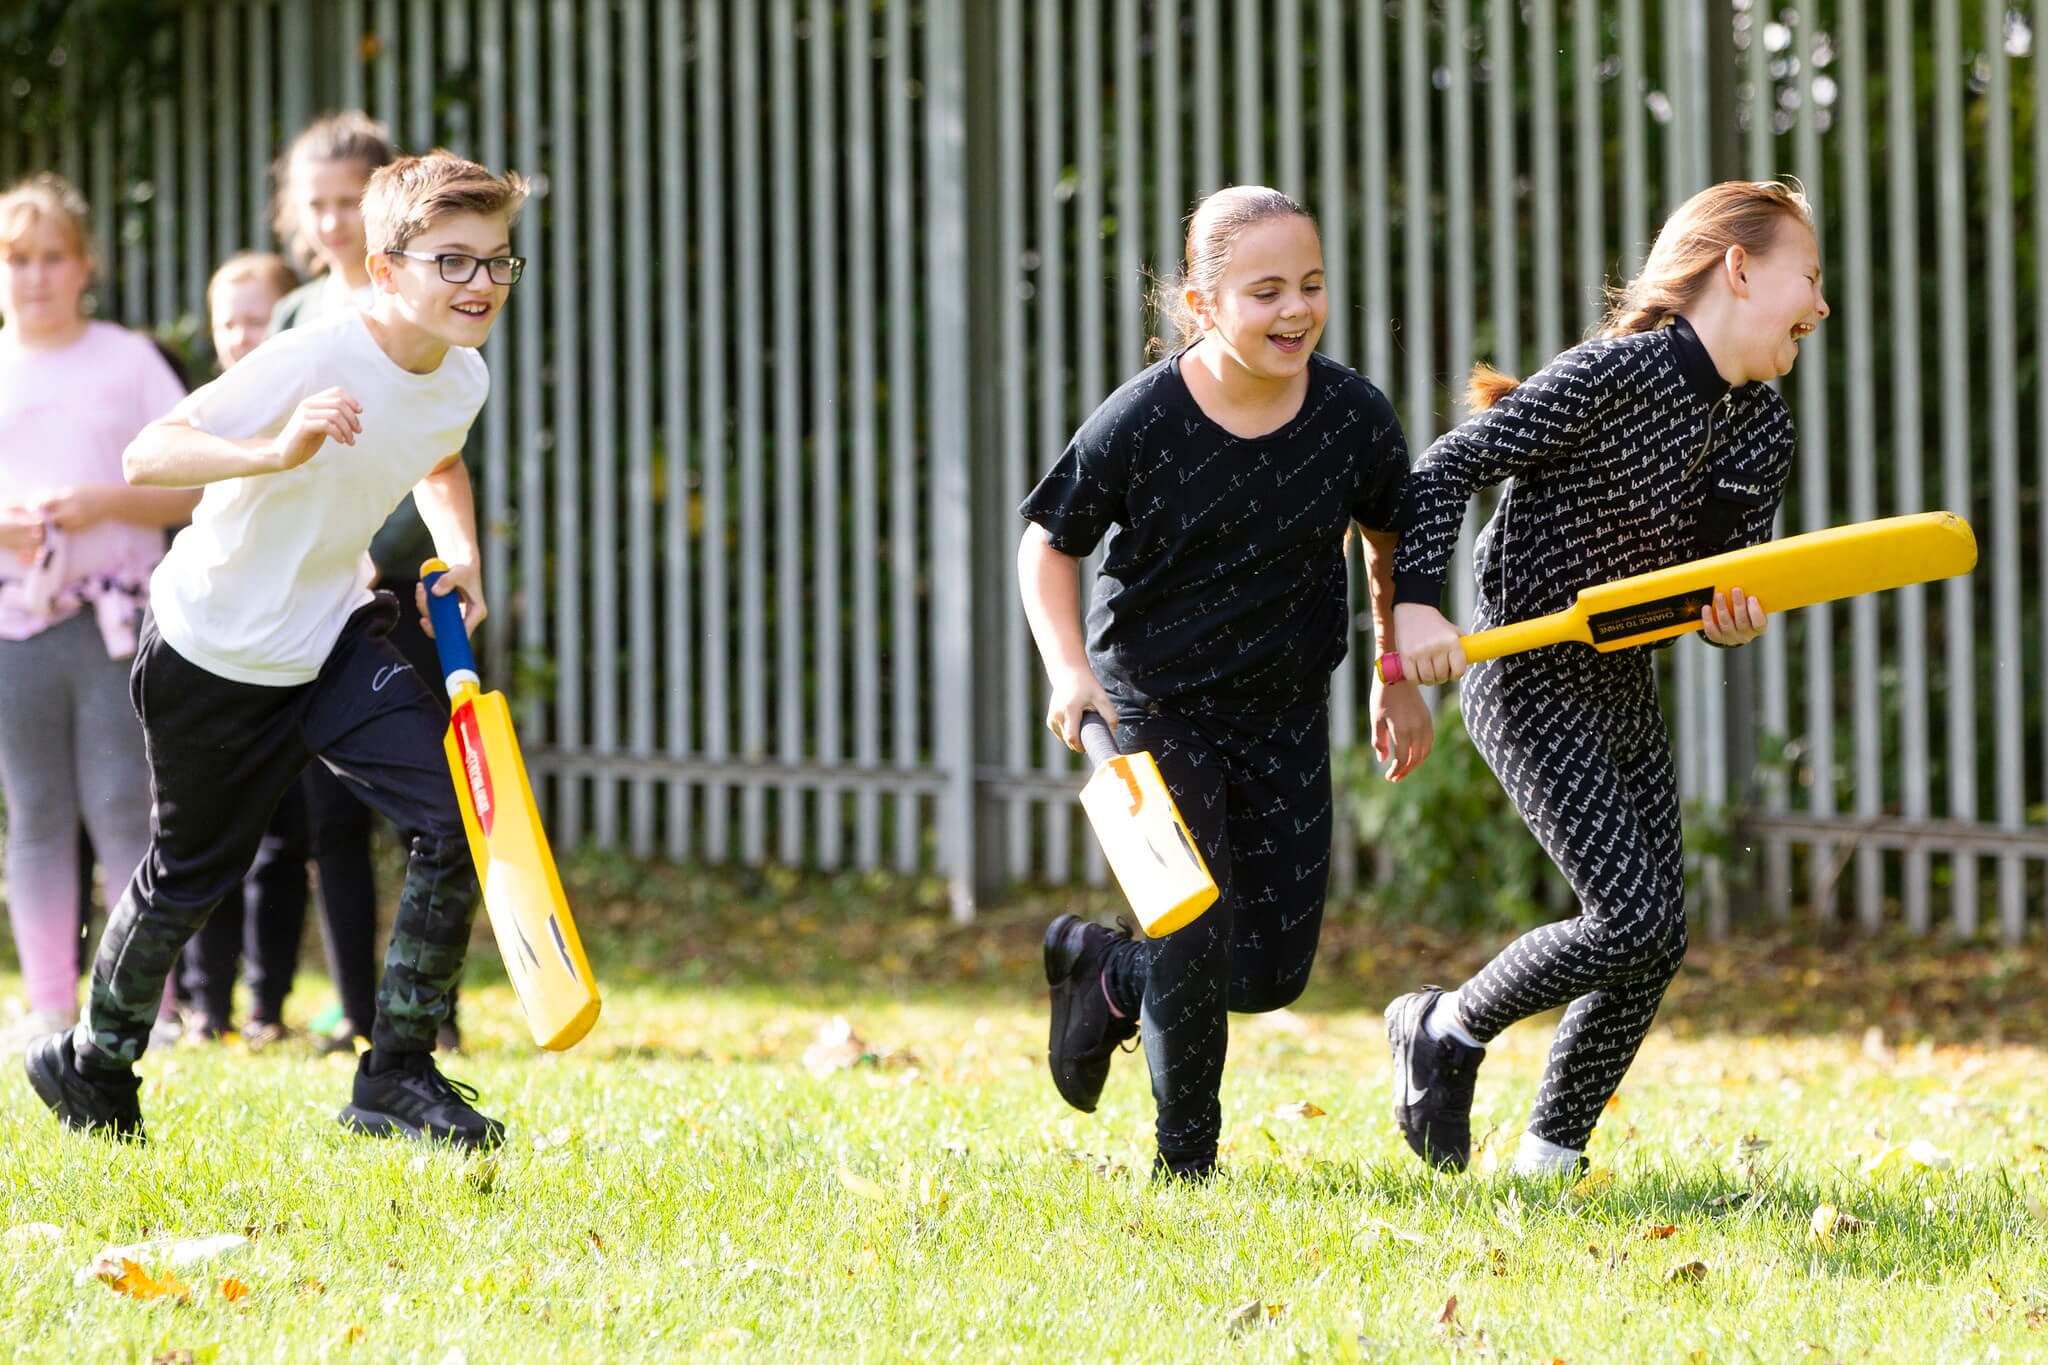 Three children sprint forwards holding their cricket bats on a school sports field